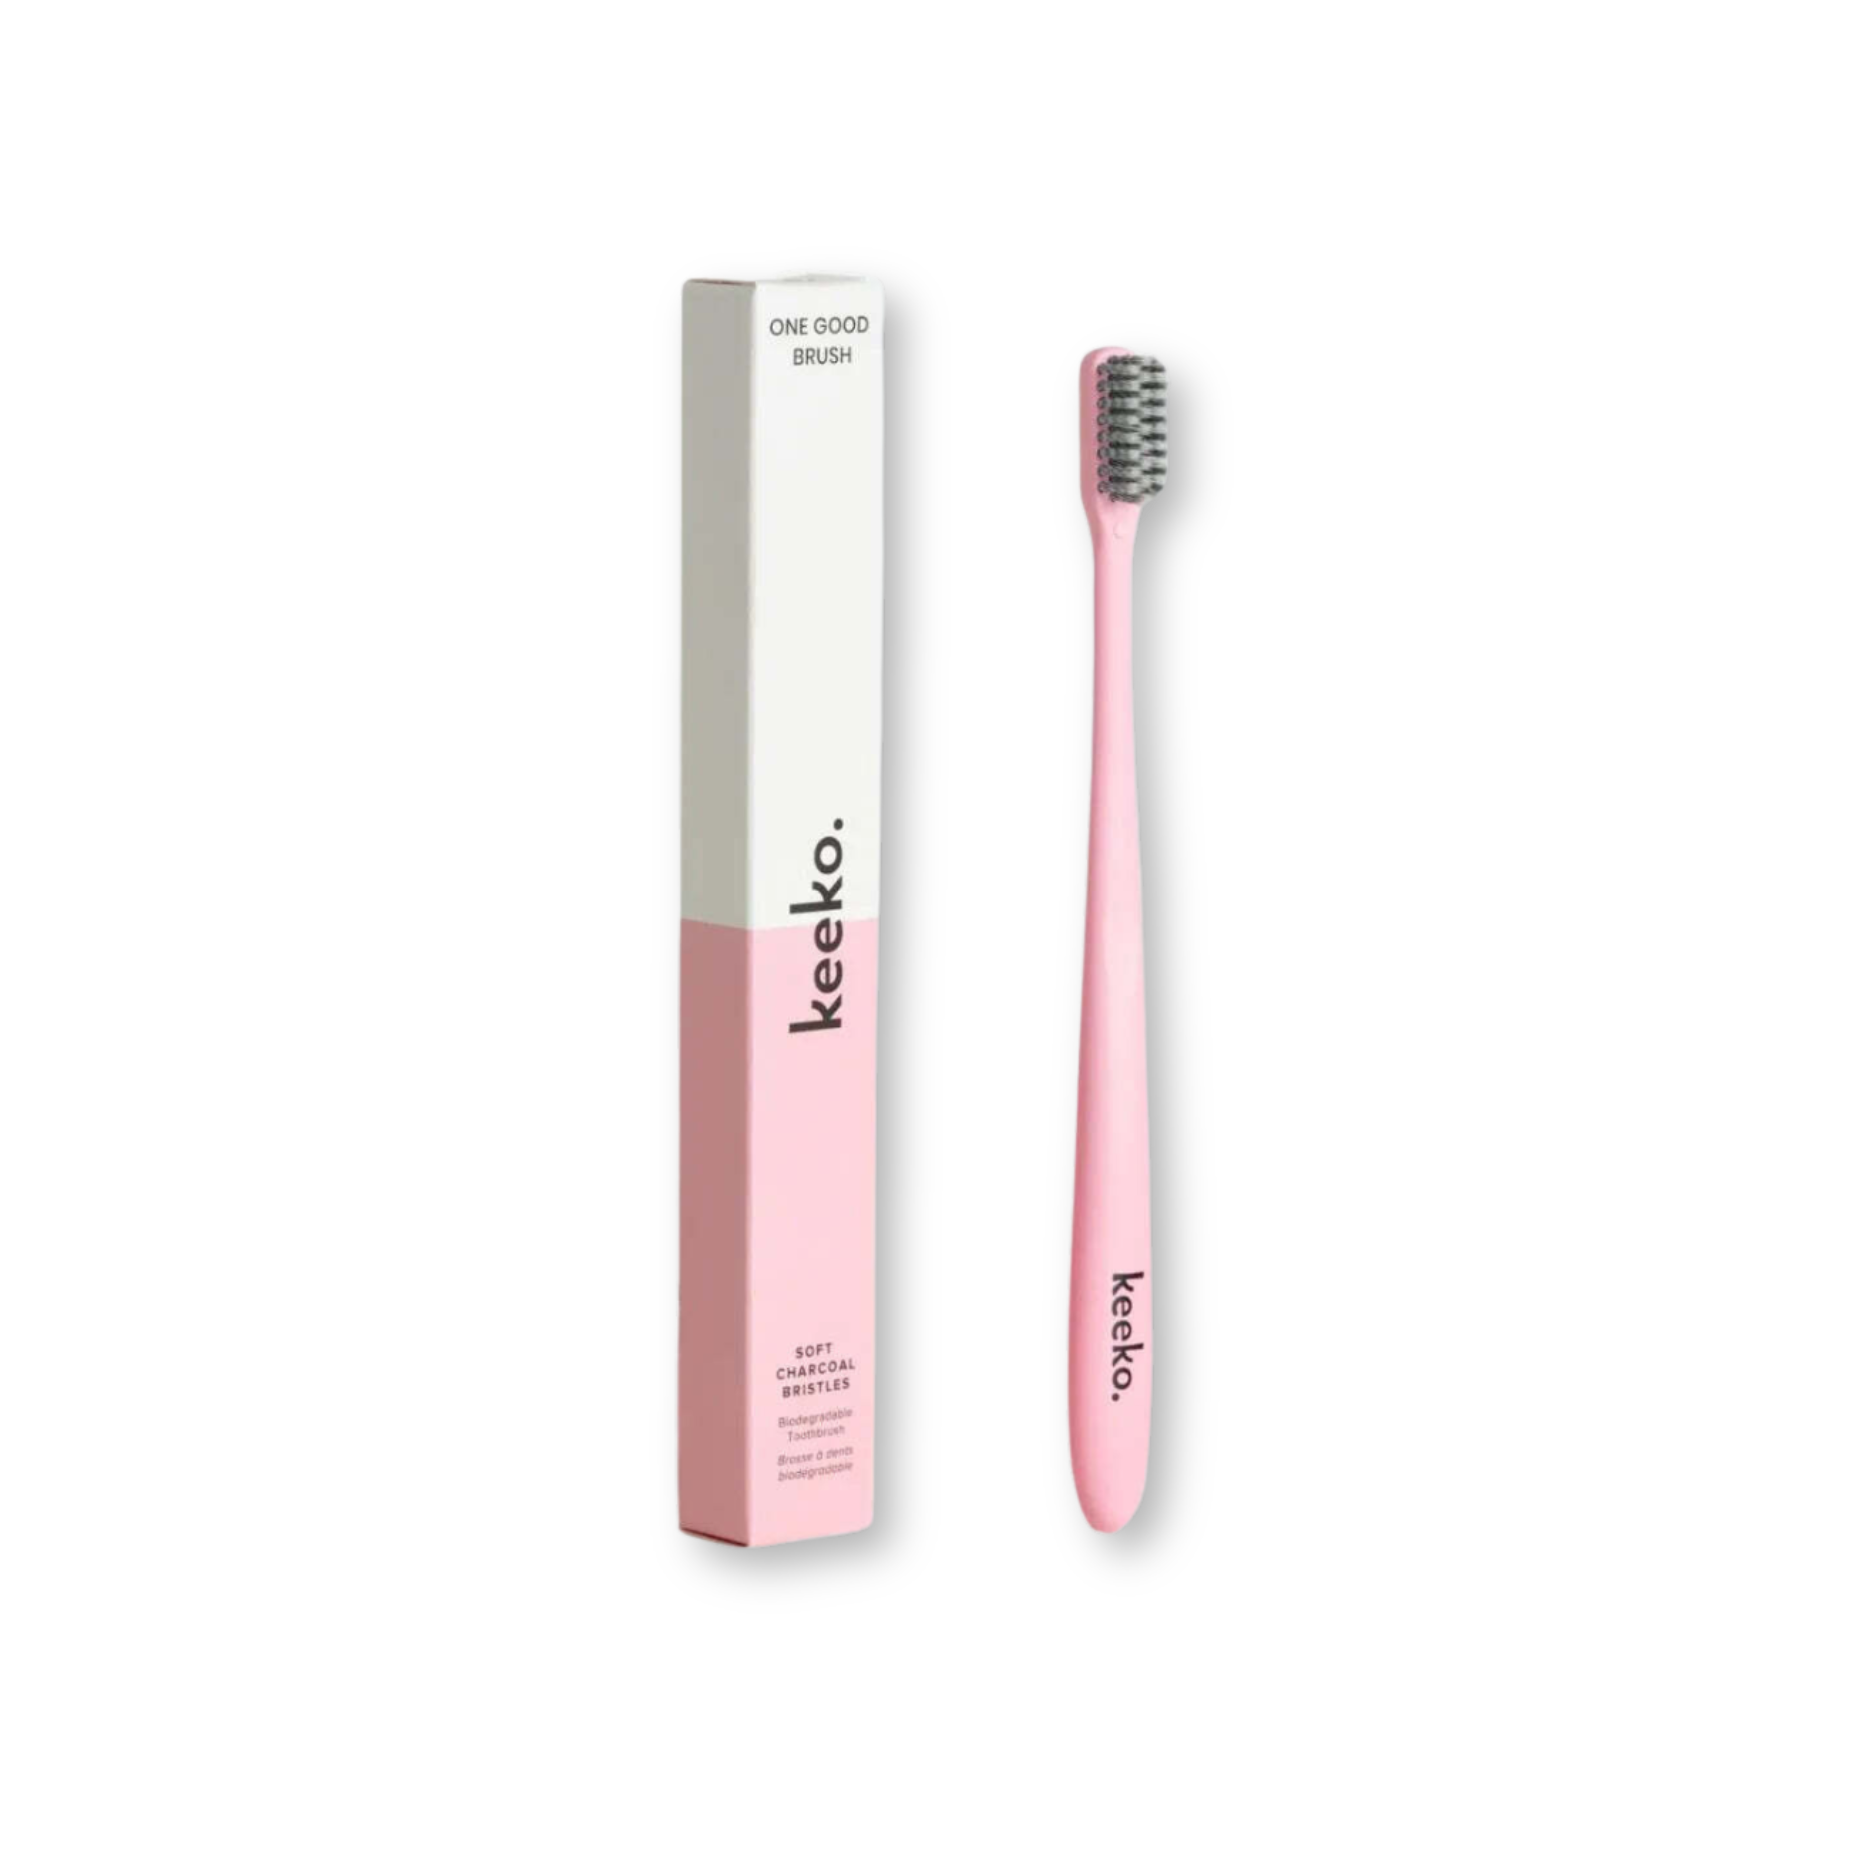 One Good Brush - Biodegradable Toothbrush - Pink